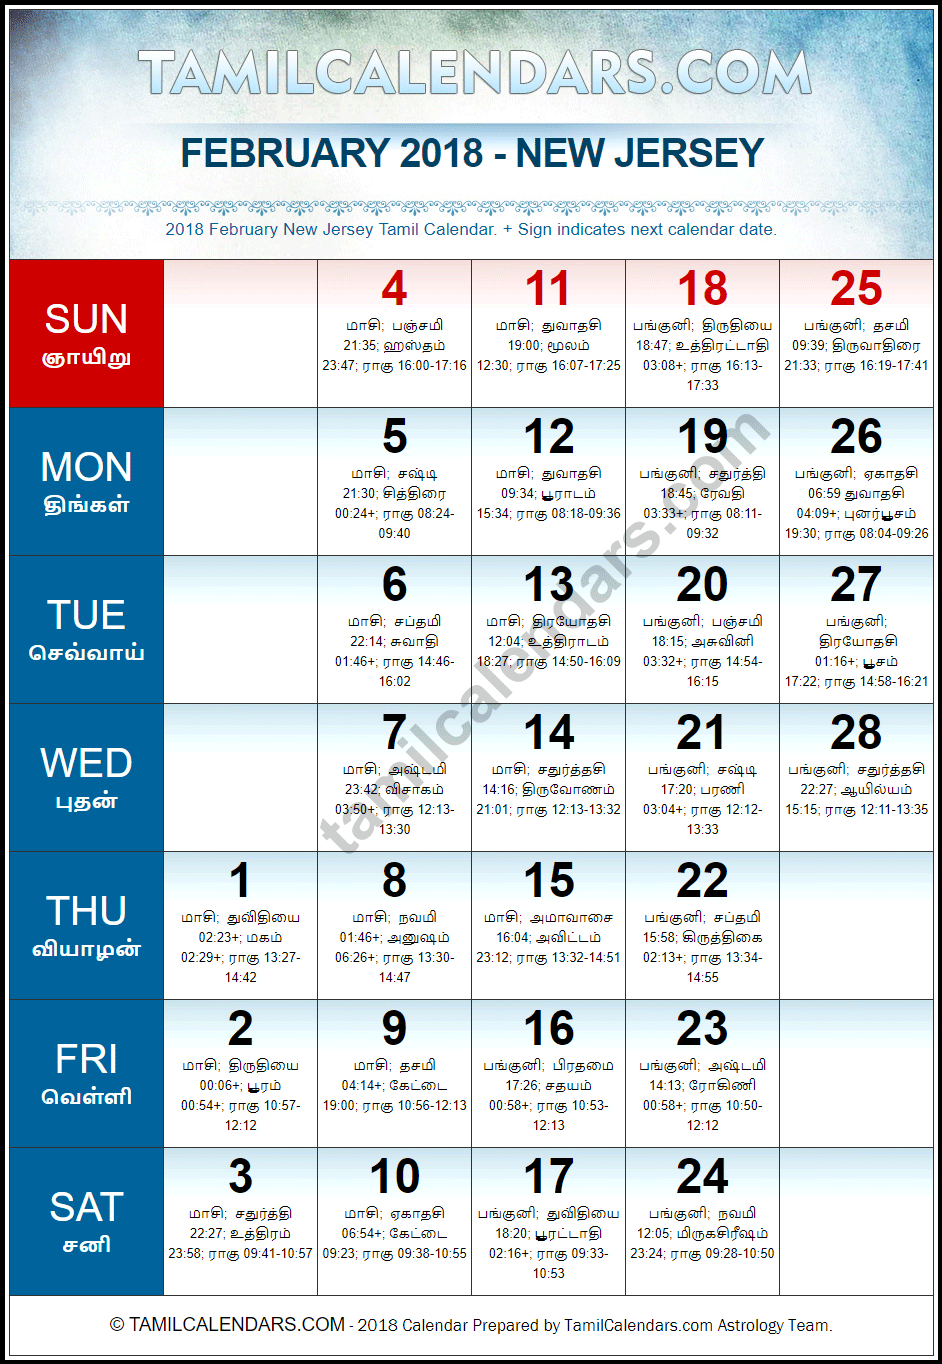 February 2018 Tamil Calendar for New Jersey, USA